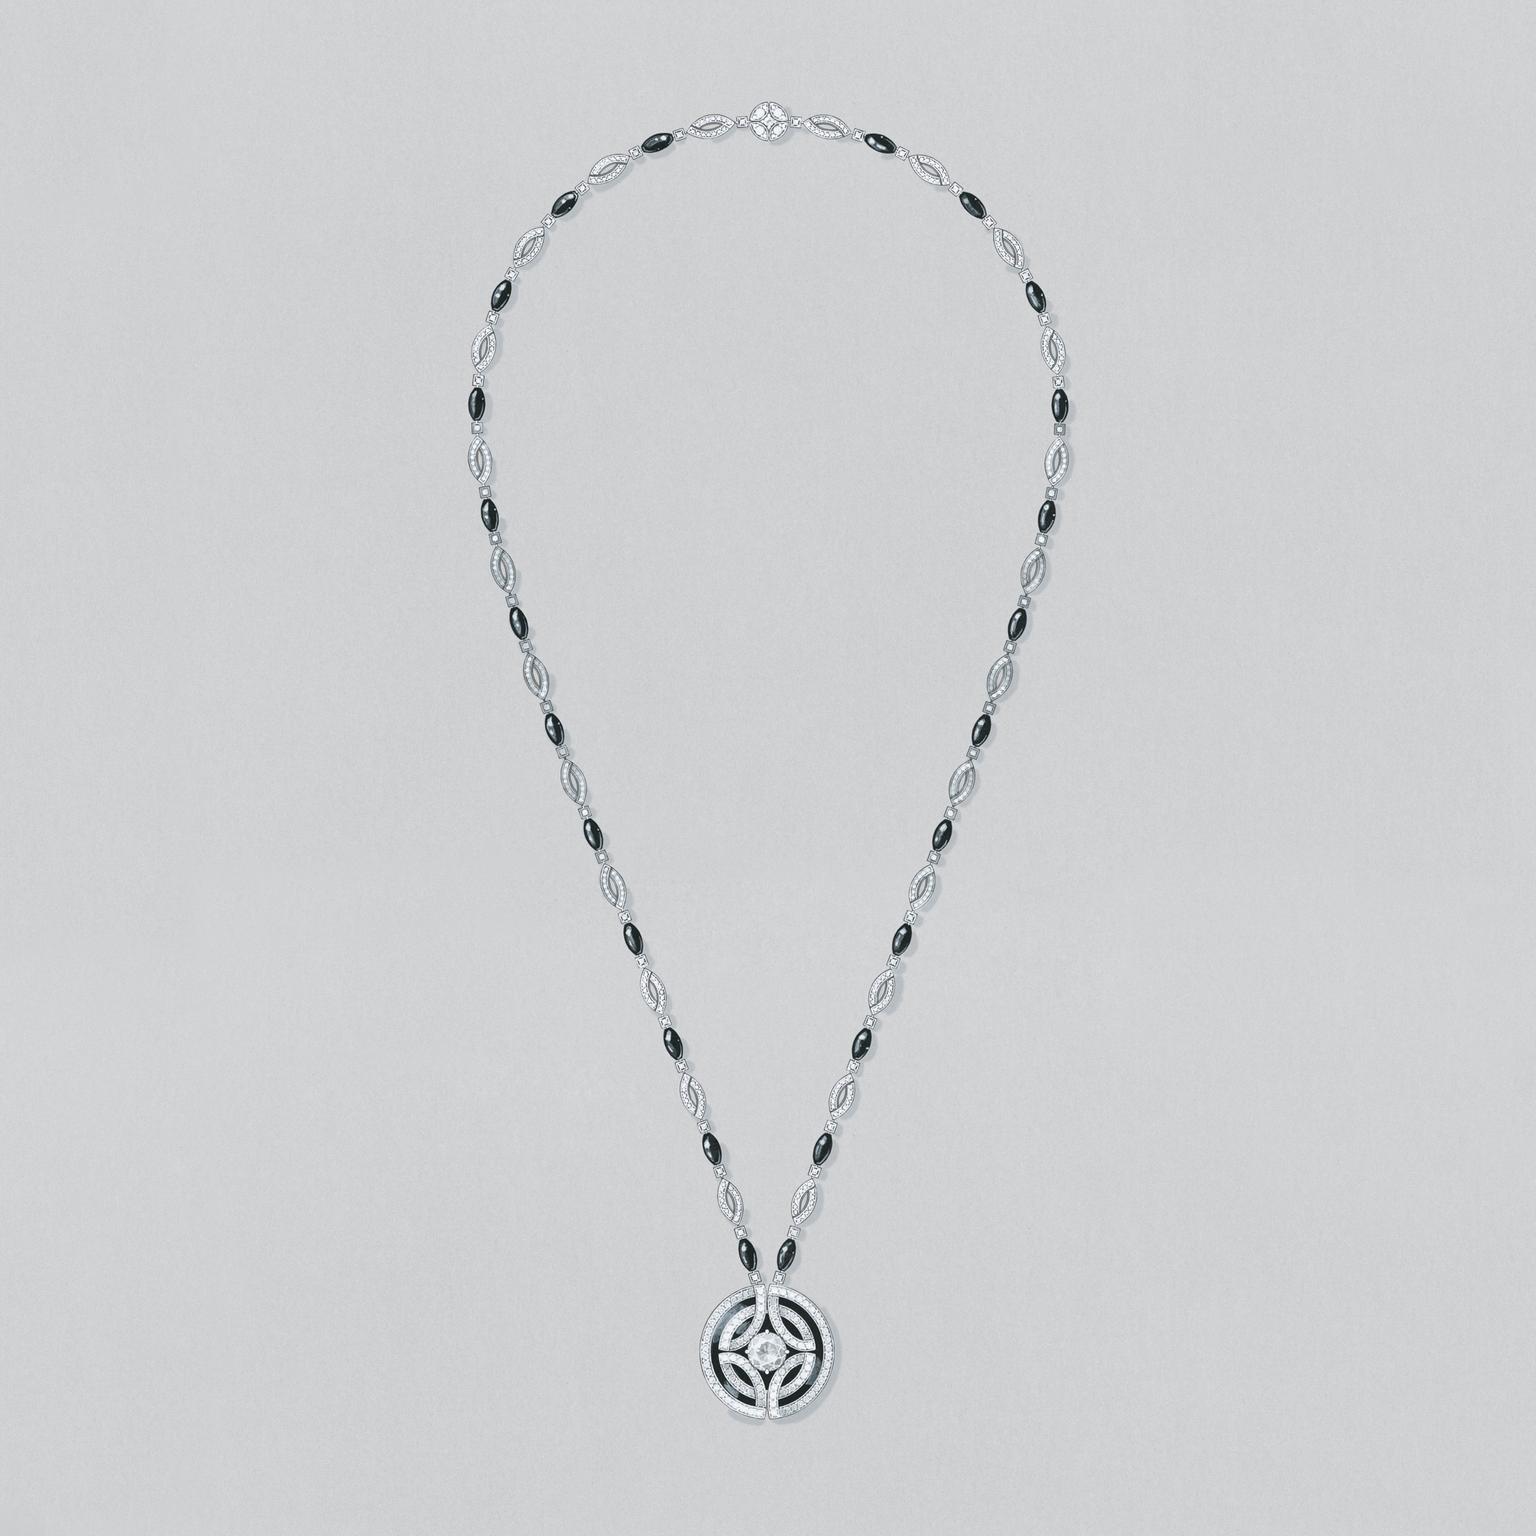 Design drawing of the Galanterie de Cartier necklace